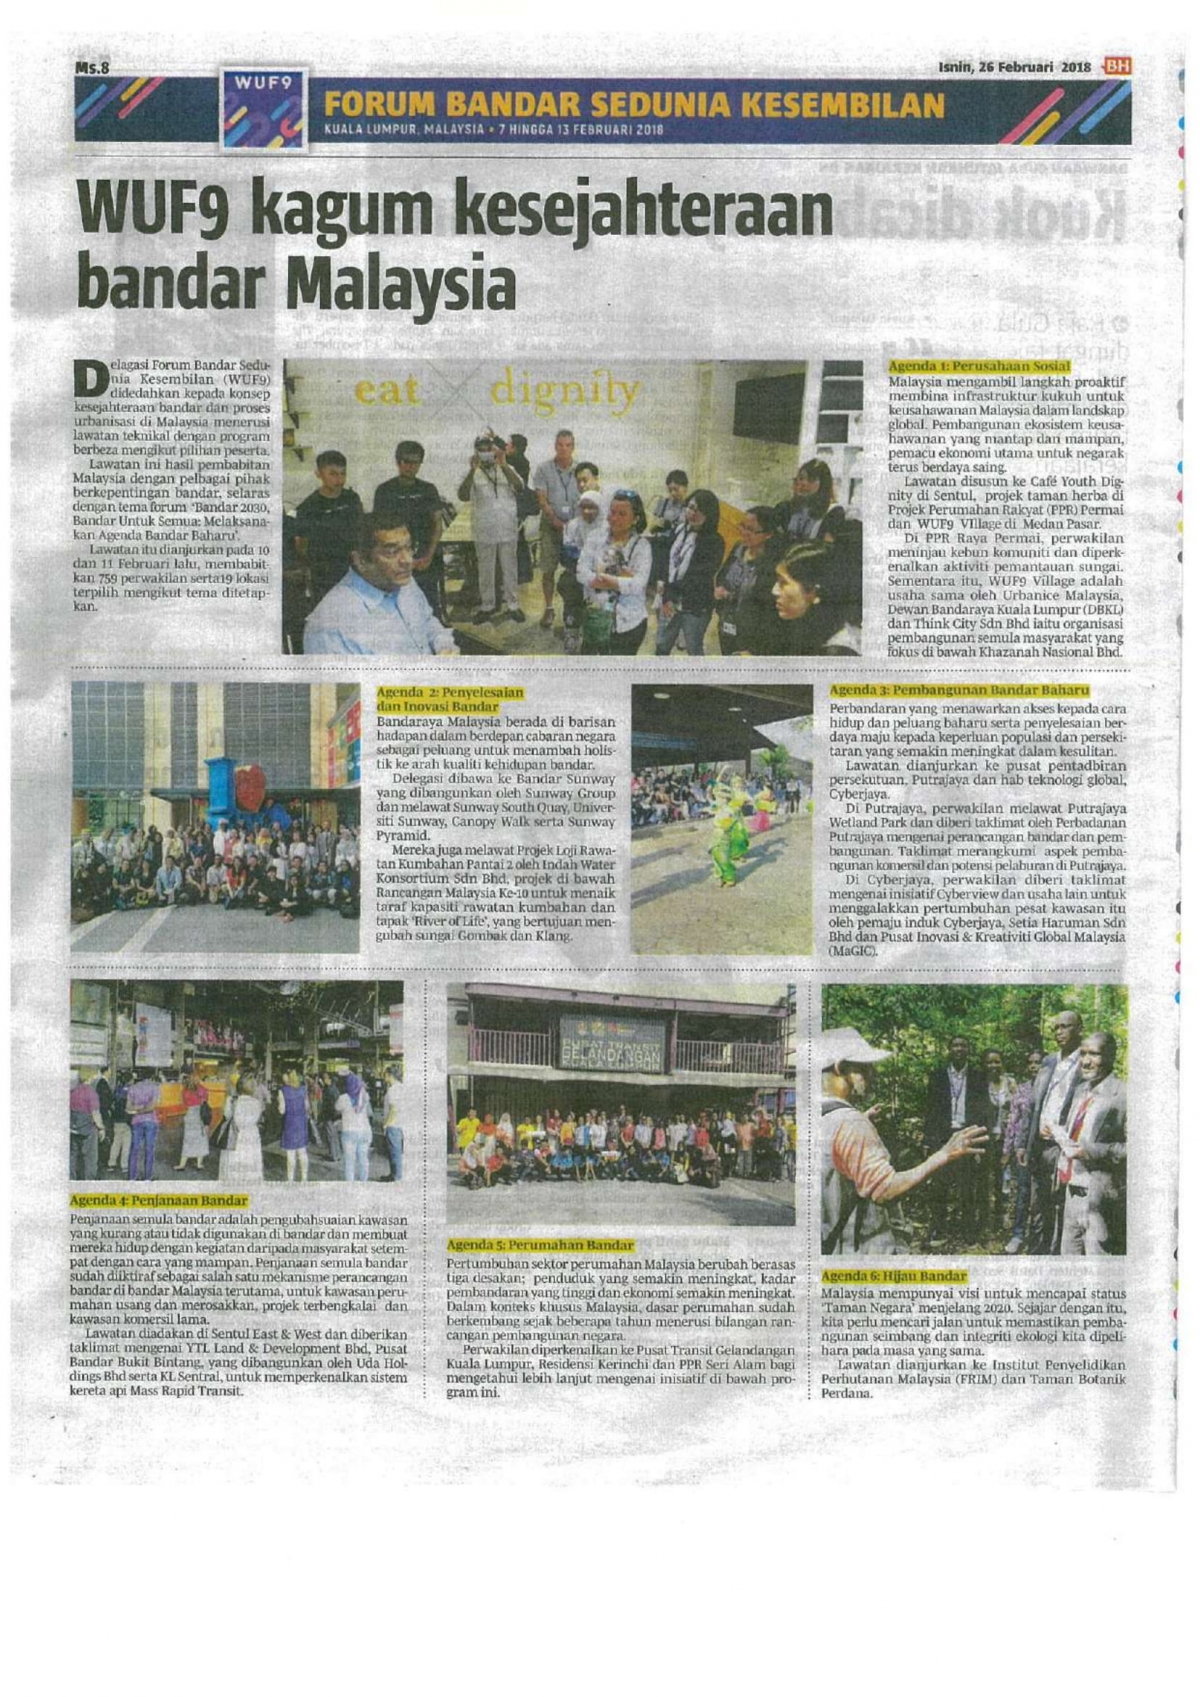 WUF9 kagum kesejahteraan bandar Malaysia